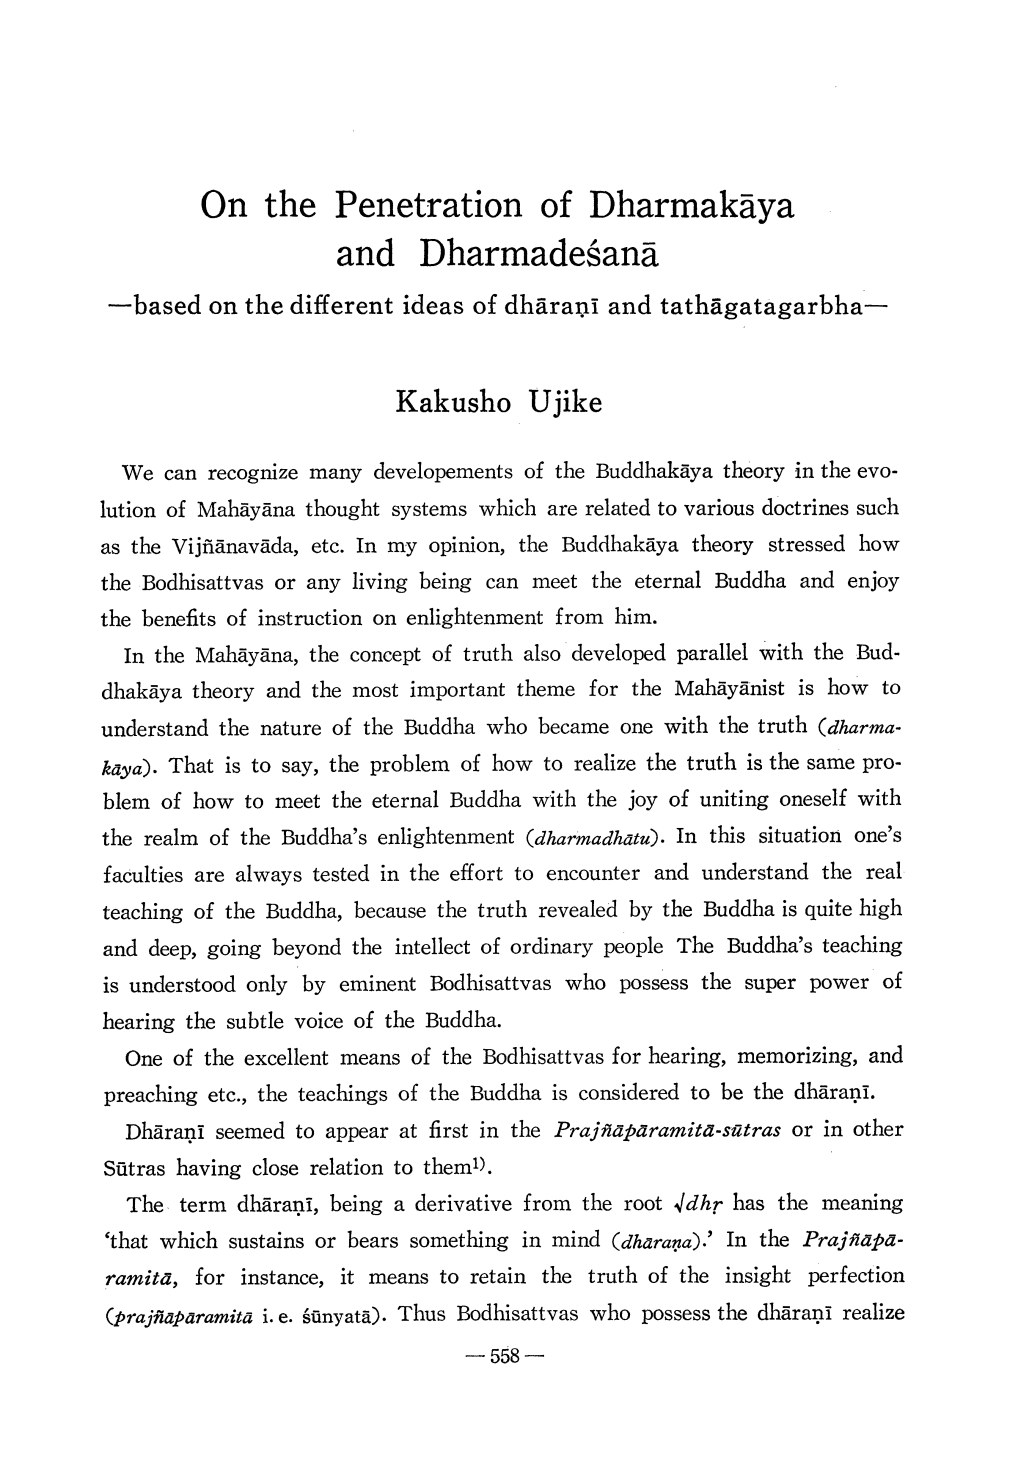 On the Penetration of Dharmakya and Dharmadesana -Based on the Different Ideas of Dharani and Tathagatagarbha